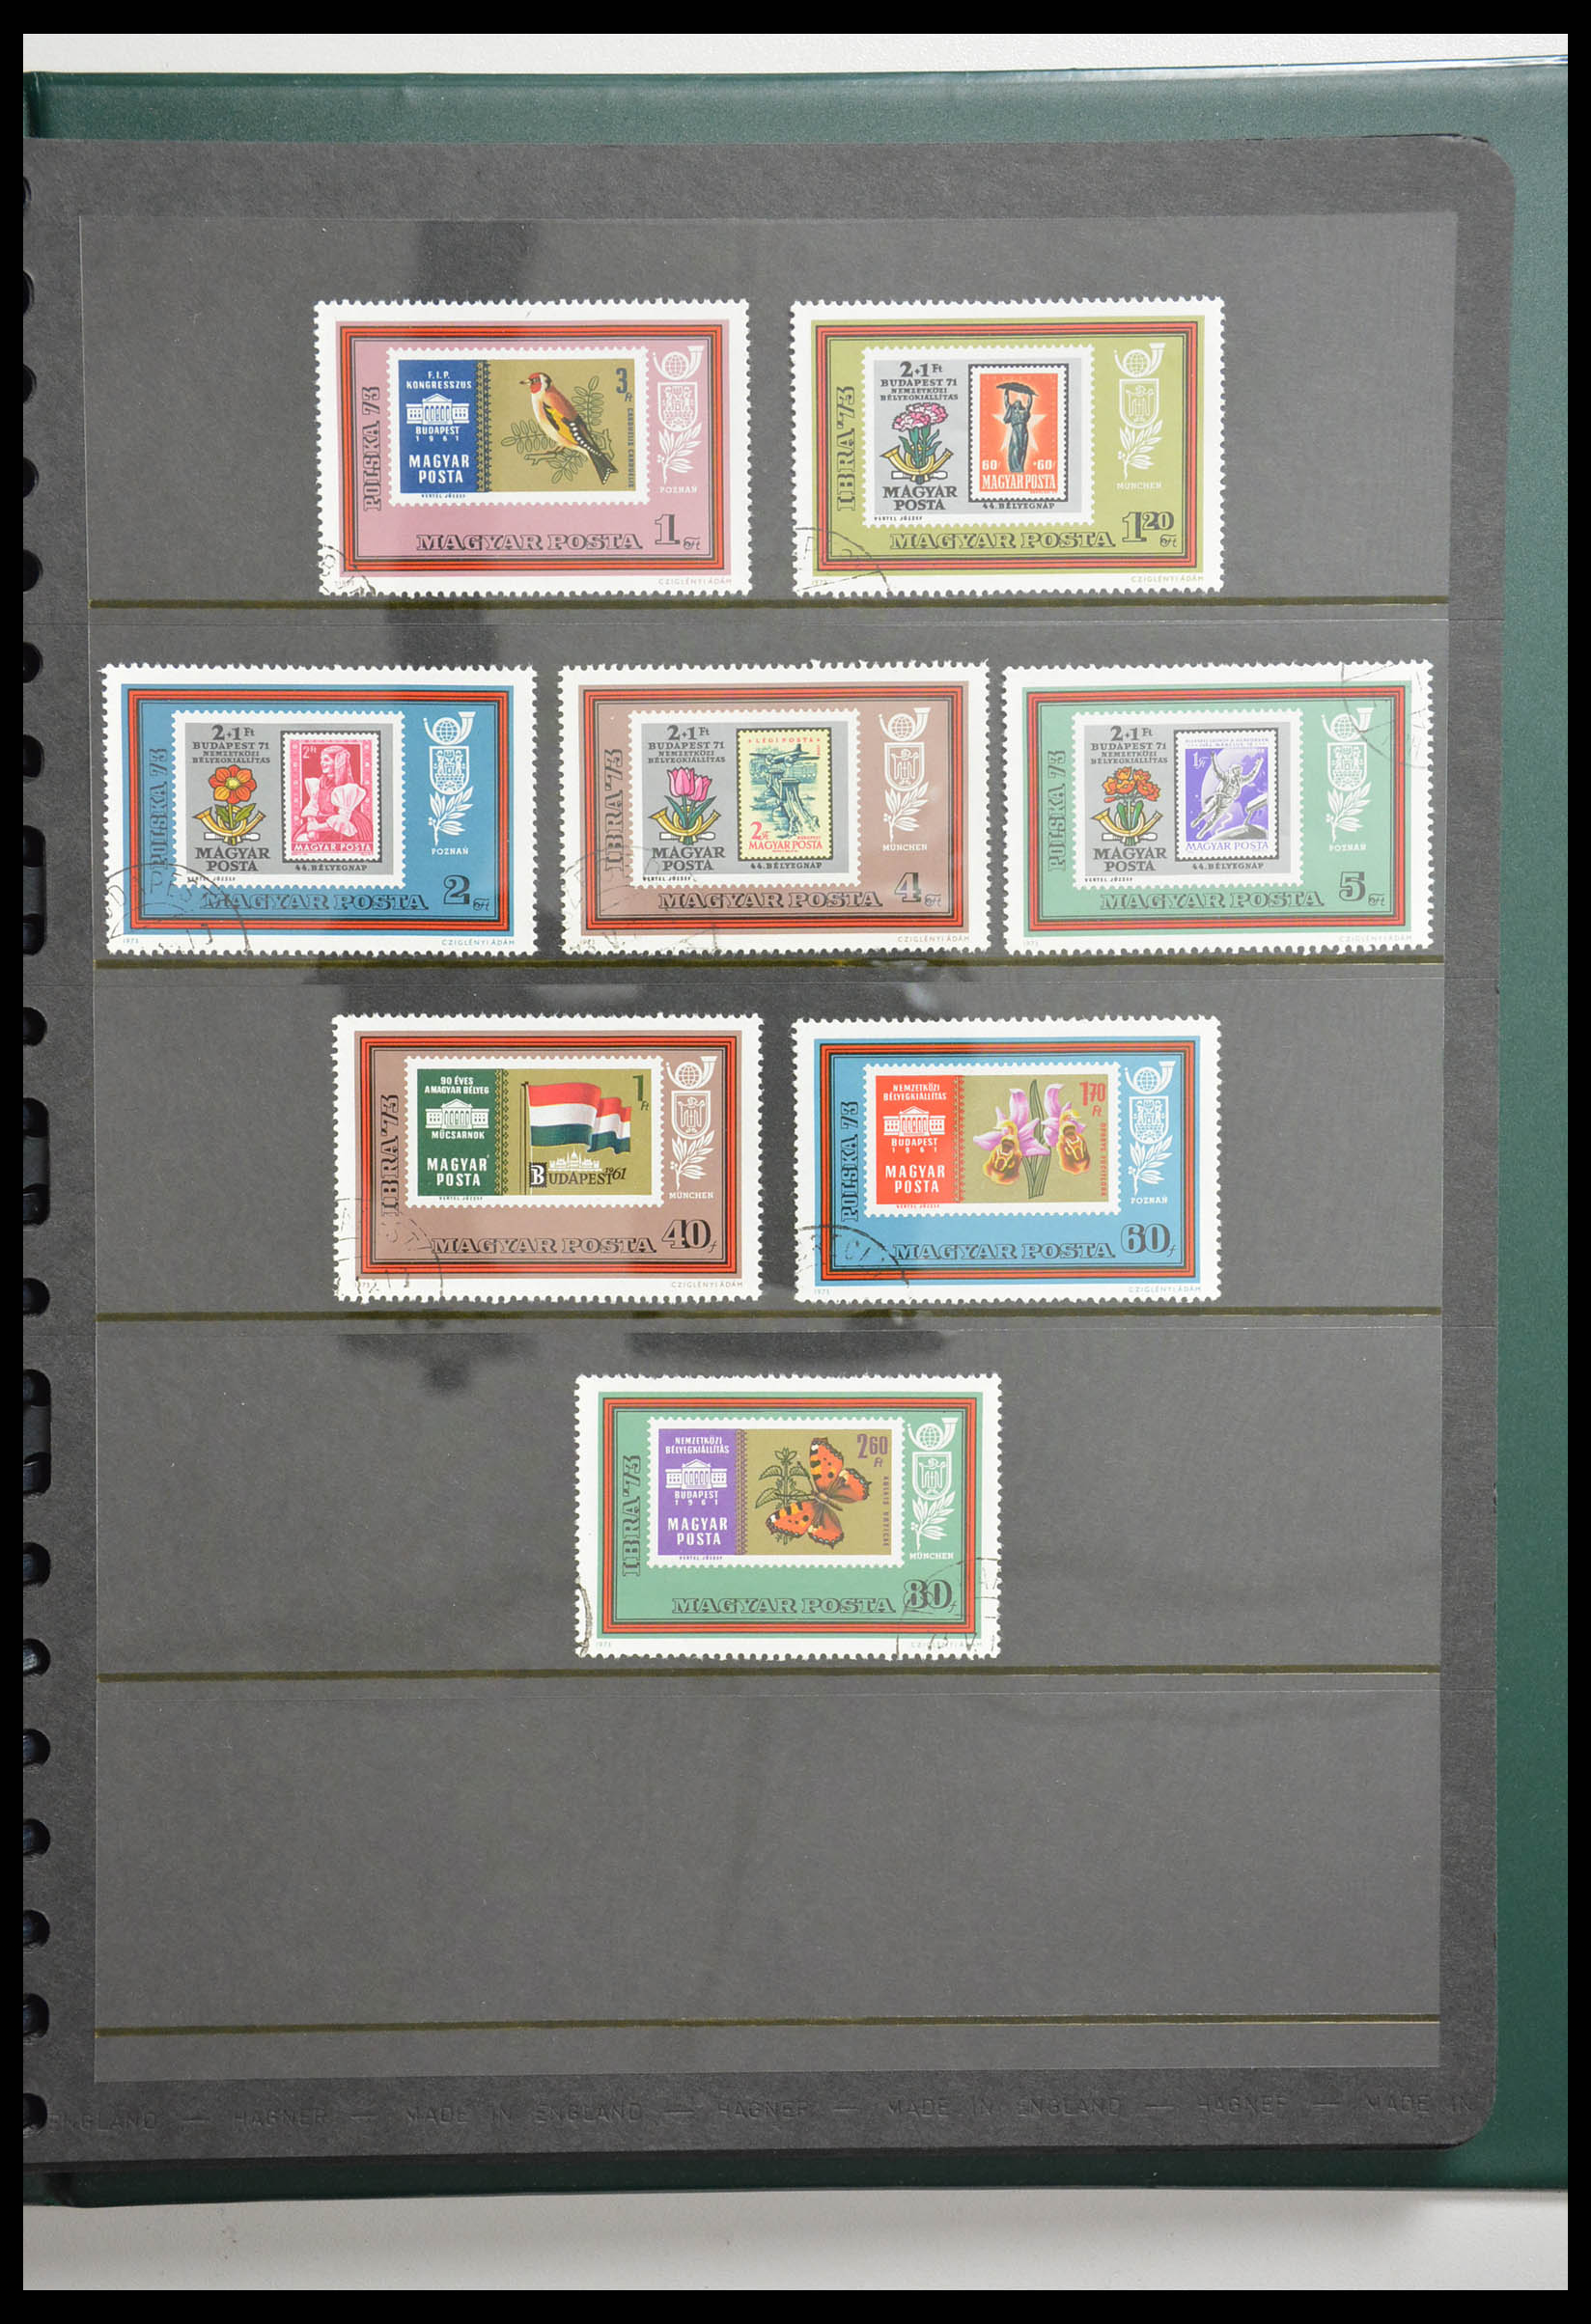 28337 064 - 28337 Postzegel op postzegel 1840-2001.